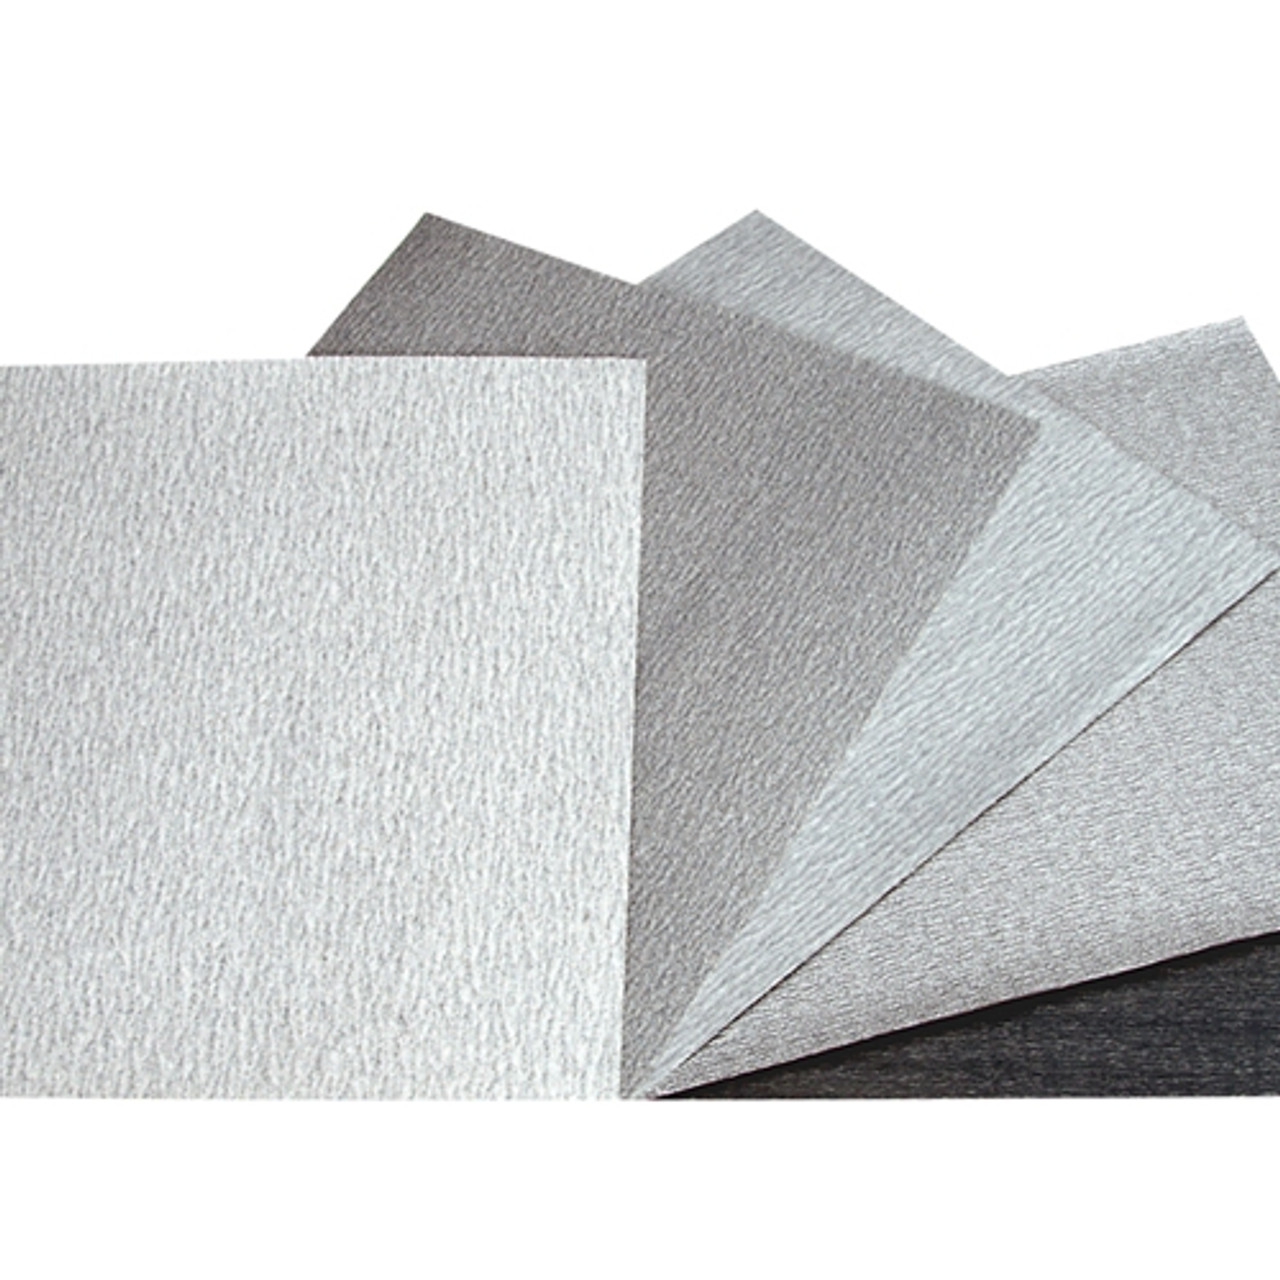 Norton®  Durite Abrasive Paper - 220 Grit  (Pkg. of 5)